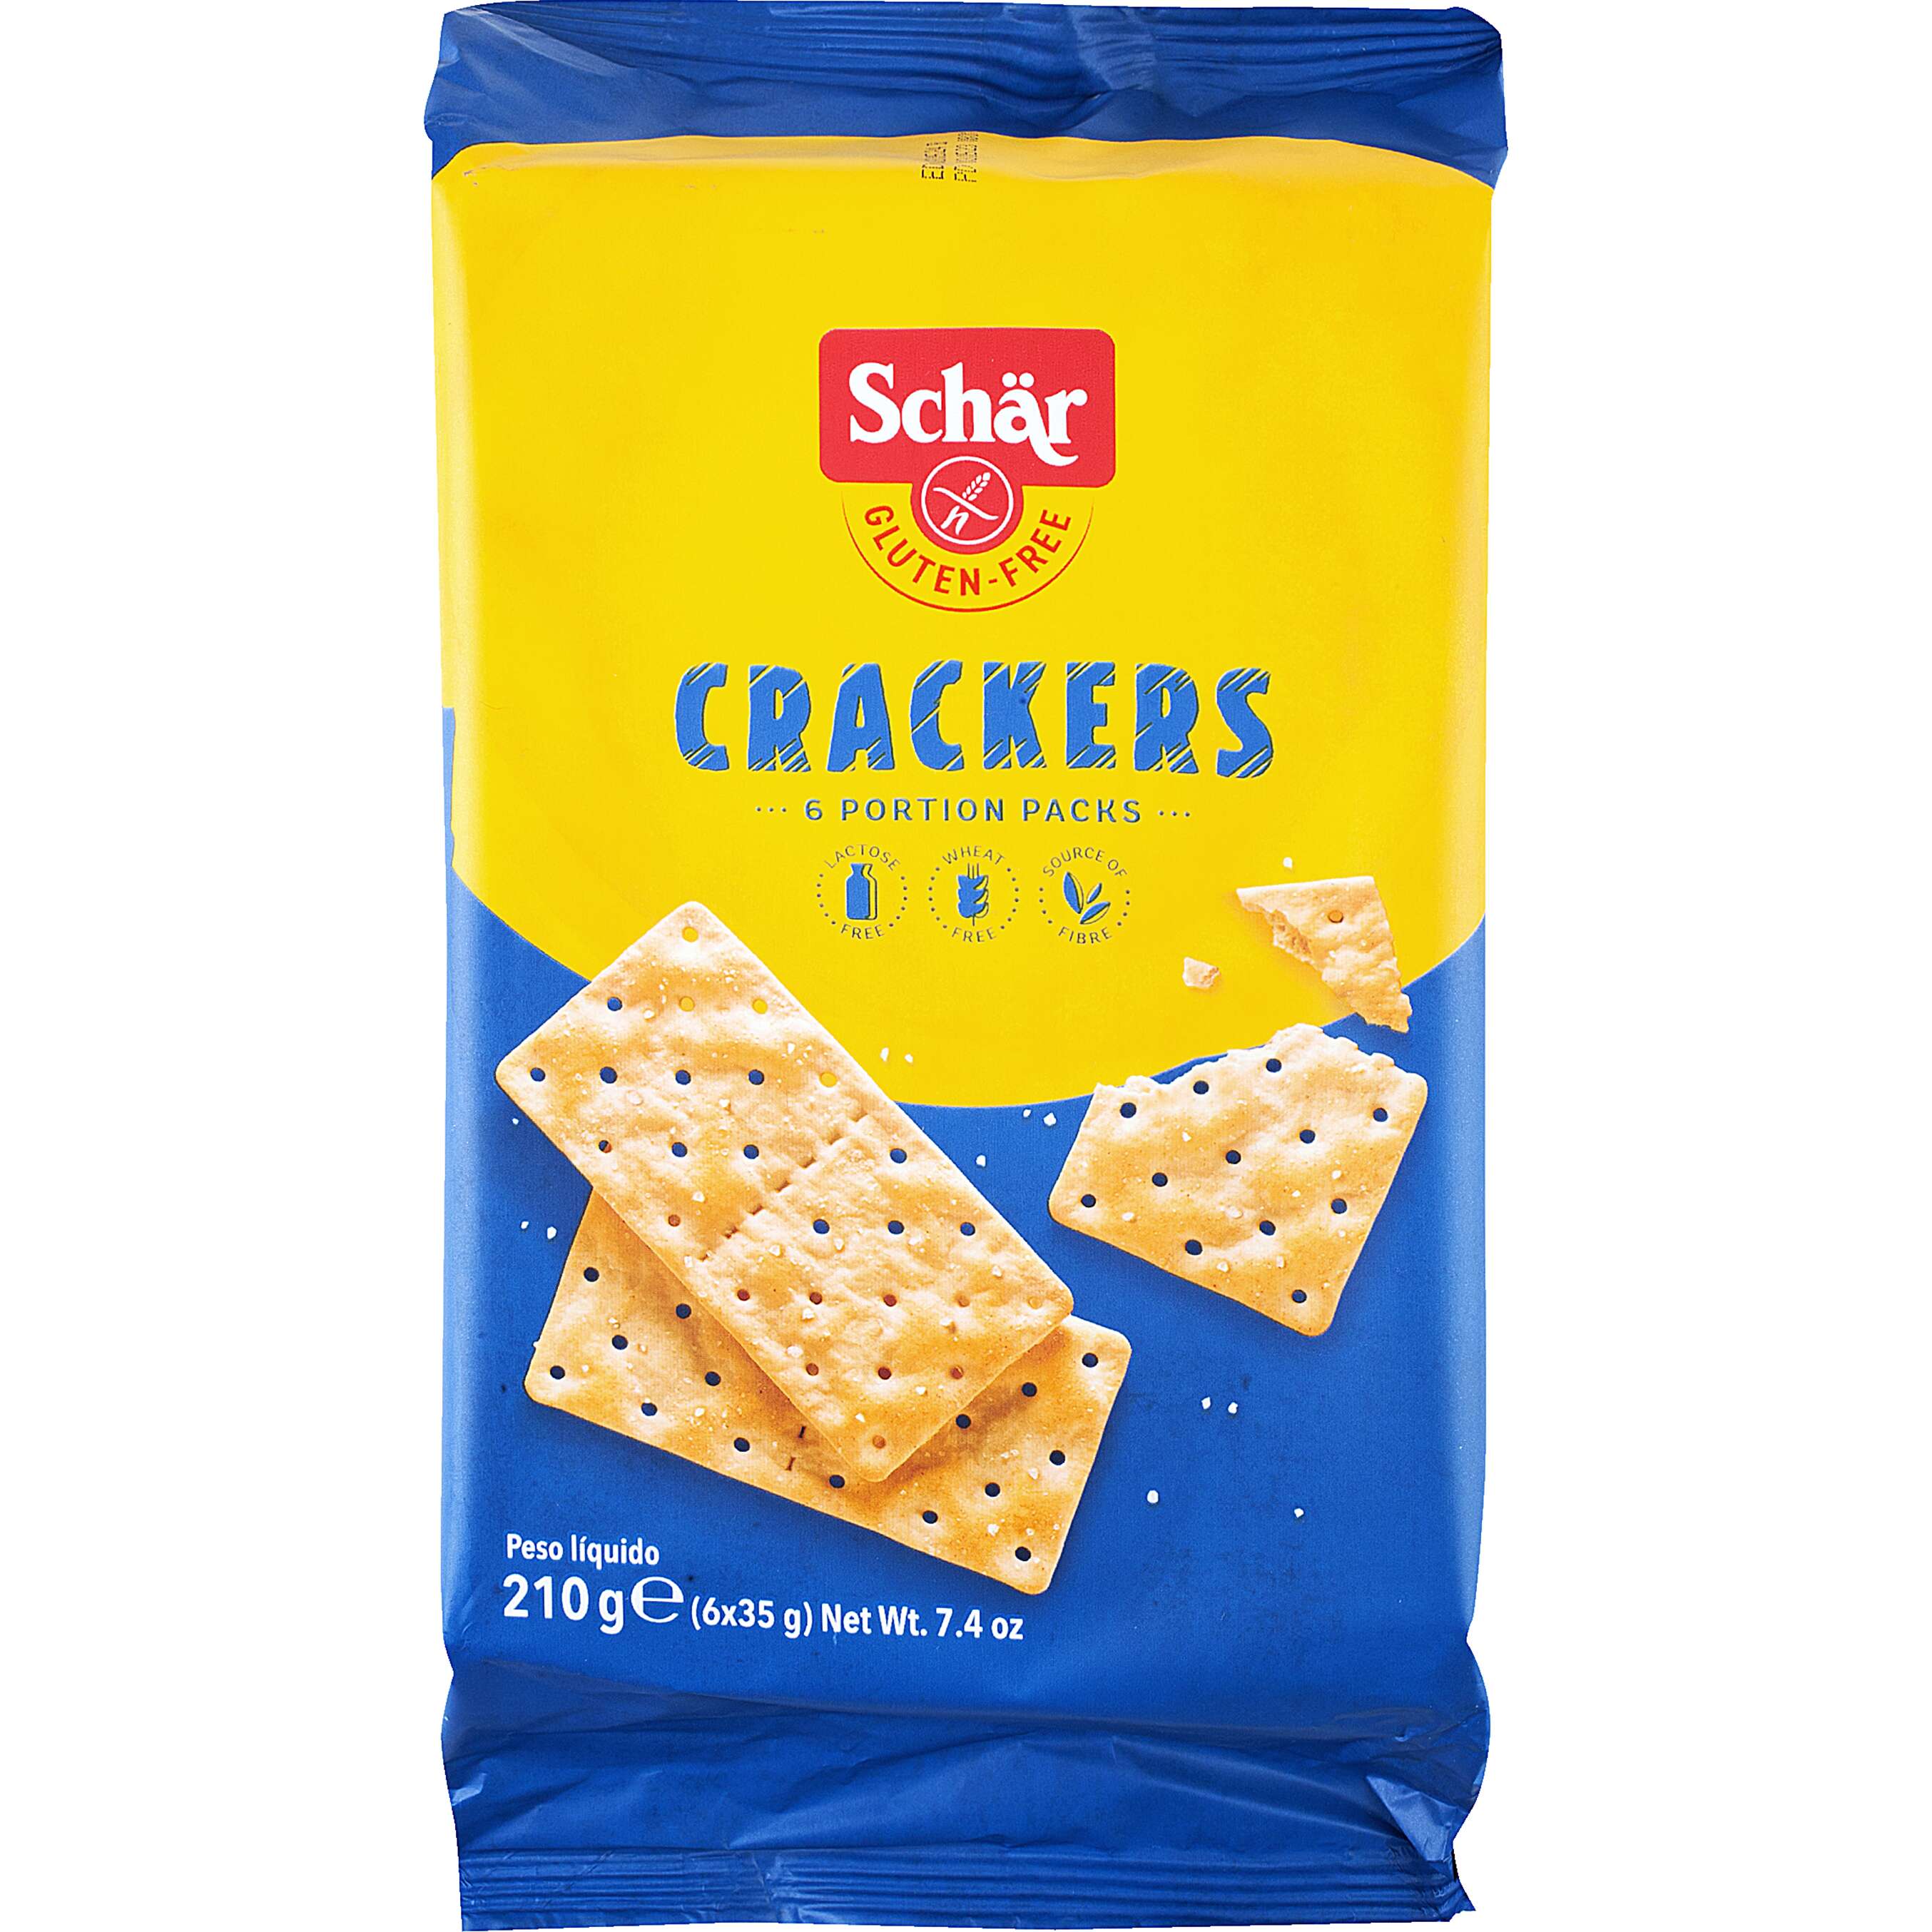 Fotografija ponude Schär crackers 210 g